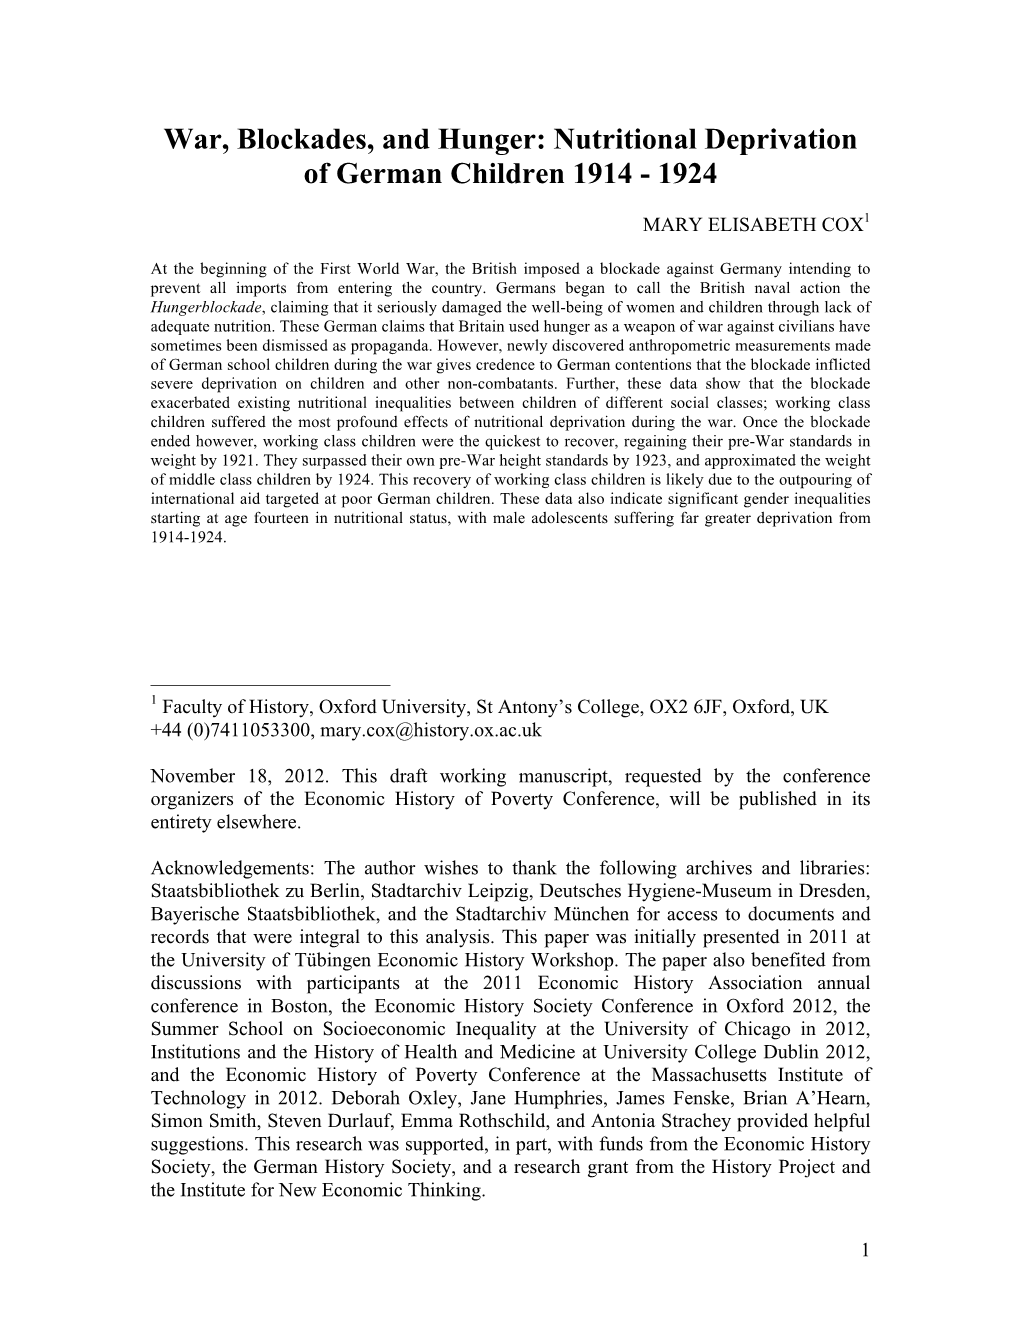 War, Blockades, and Hunger: Nutritional Deprivation of German Children 1914 - 1924